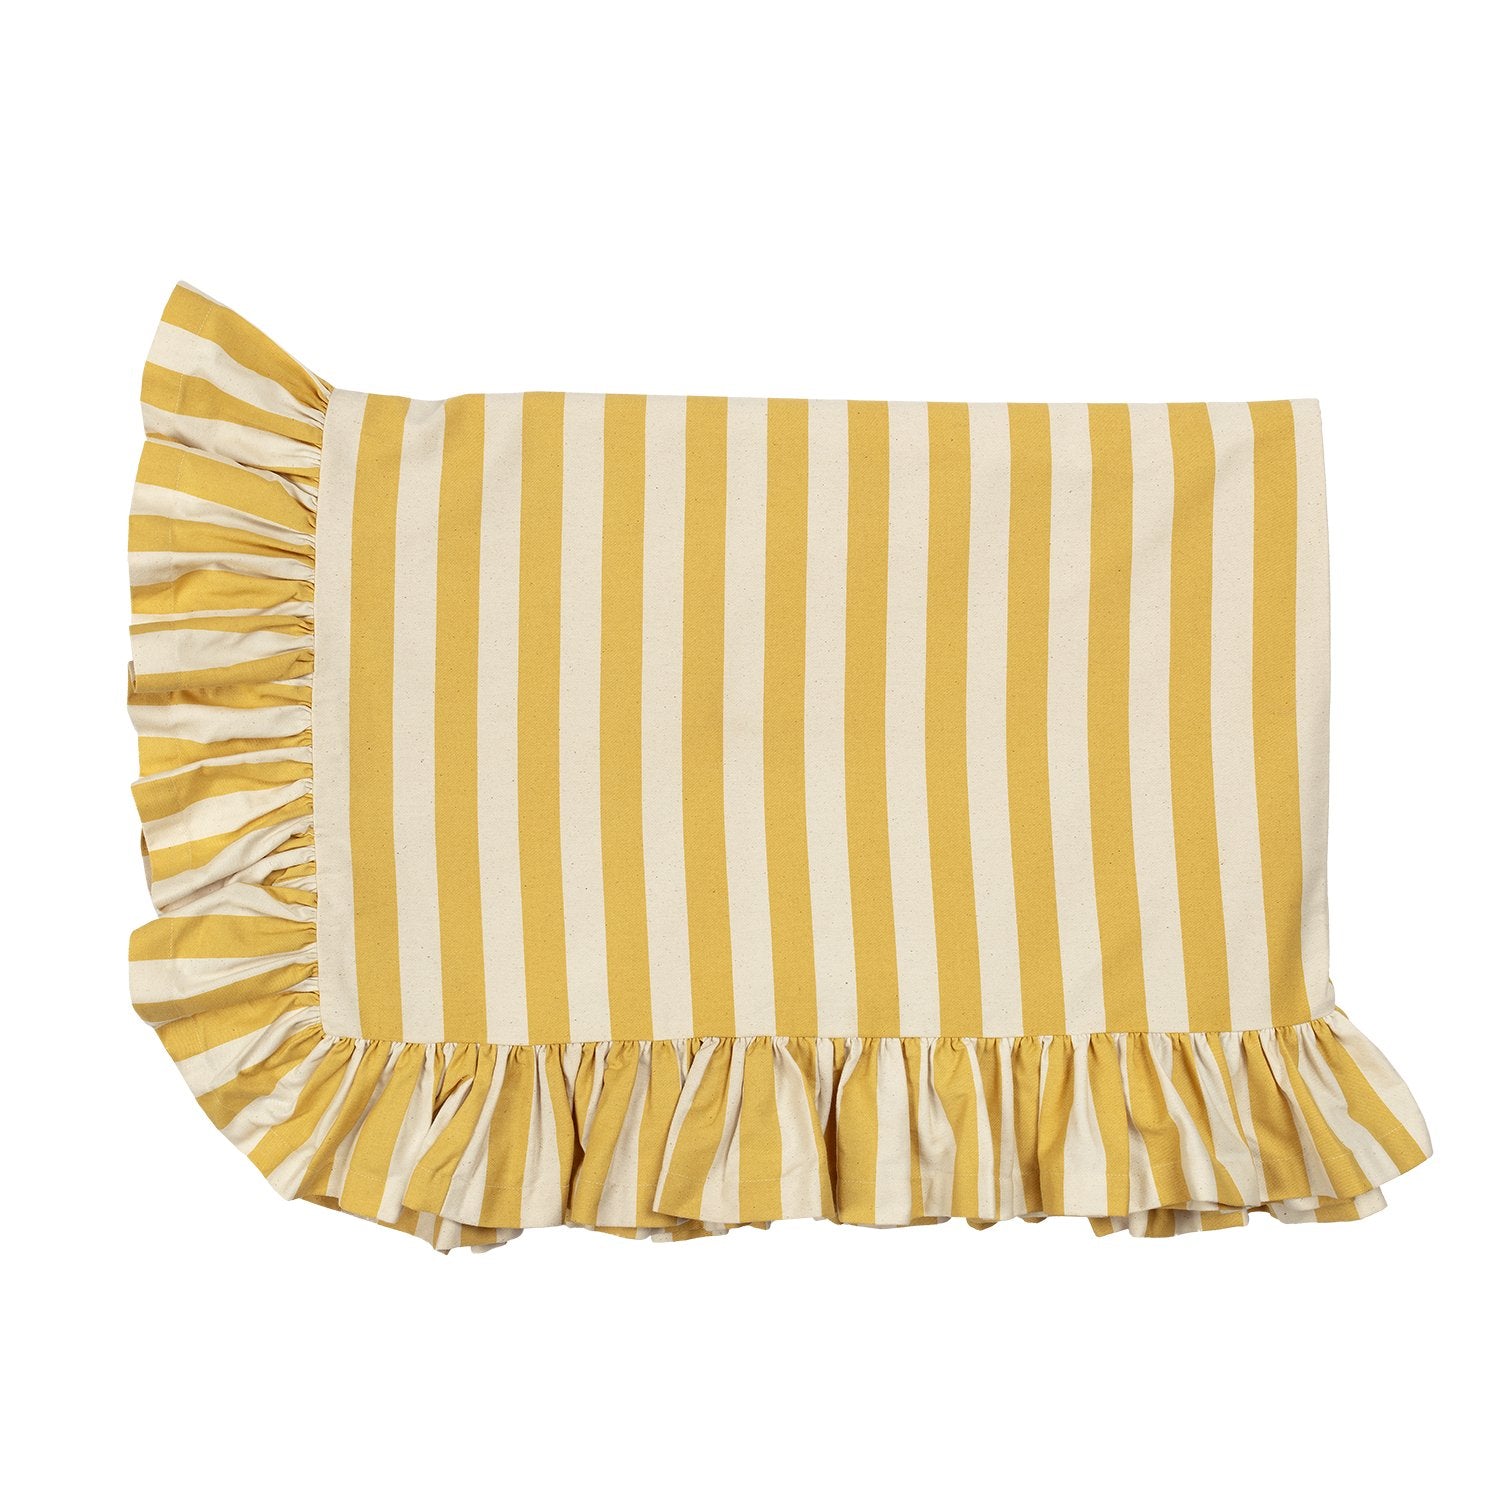 Tangier Mustard Stripe Ruffle Tablecloth - Alice Palmer & Co